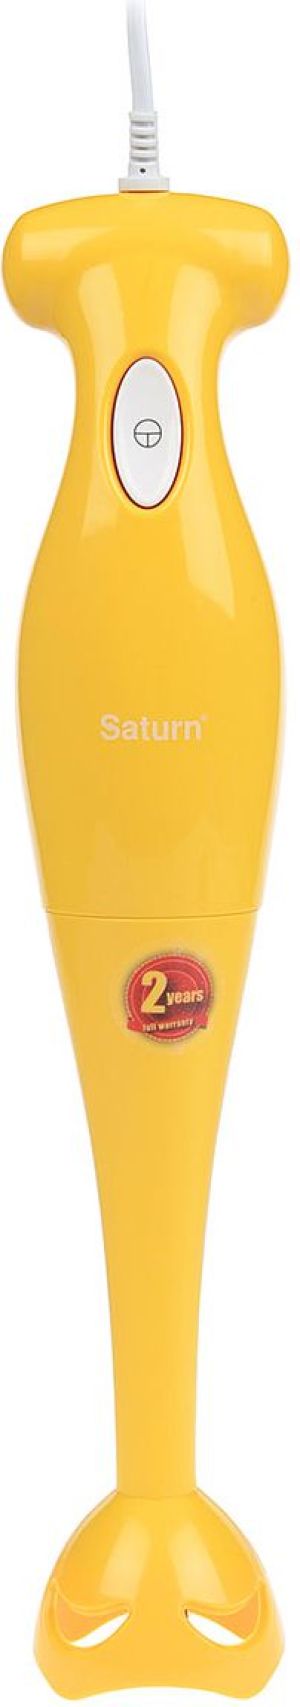 Blender Saturn ST-FP0046 1